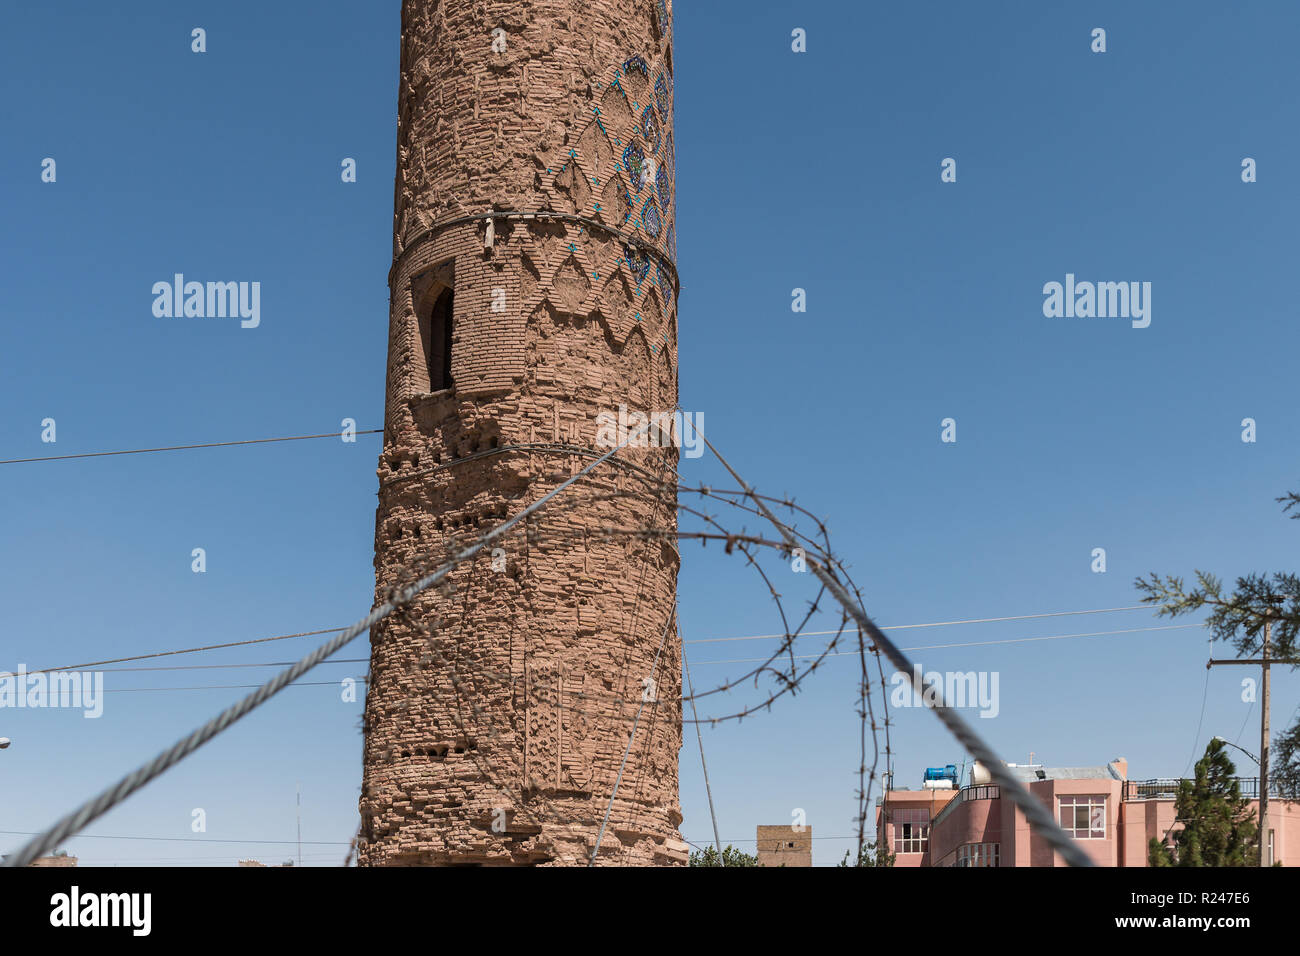 The 15th-century minarets of Herat, Afghanistan Stock Photo